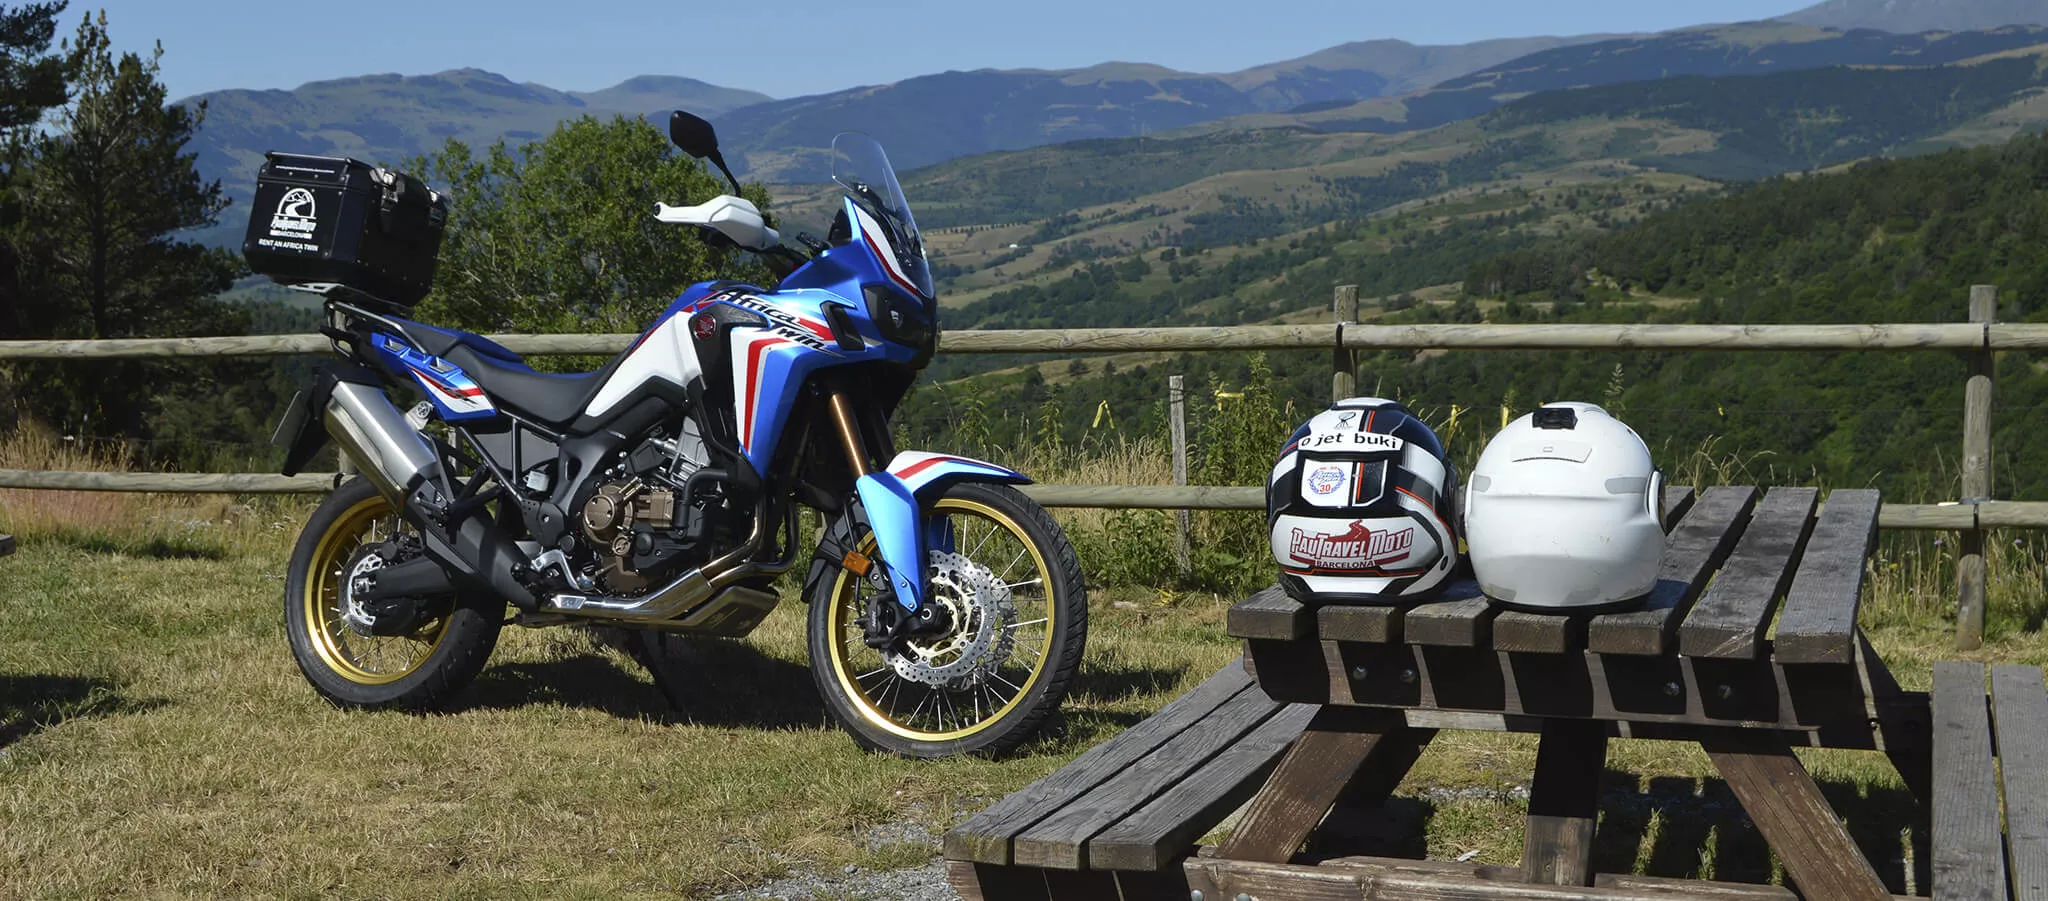 Malaga BMW Motorcycle Rental in Spain, Europe | Motorcycles - Rated 0.9